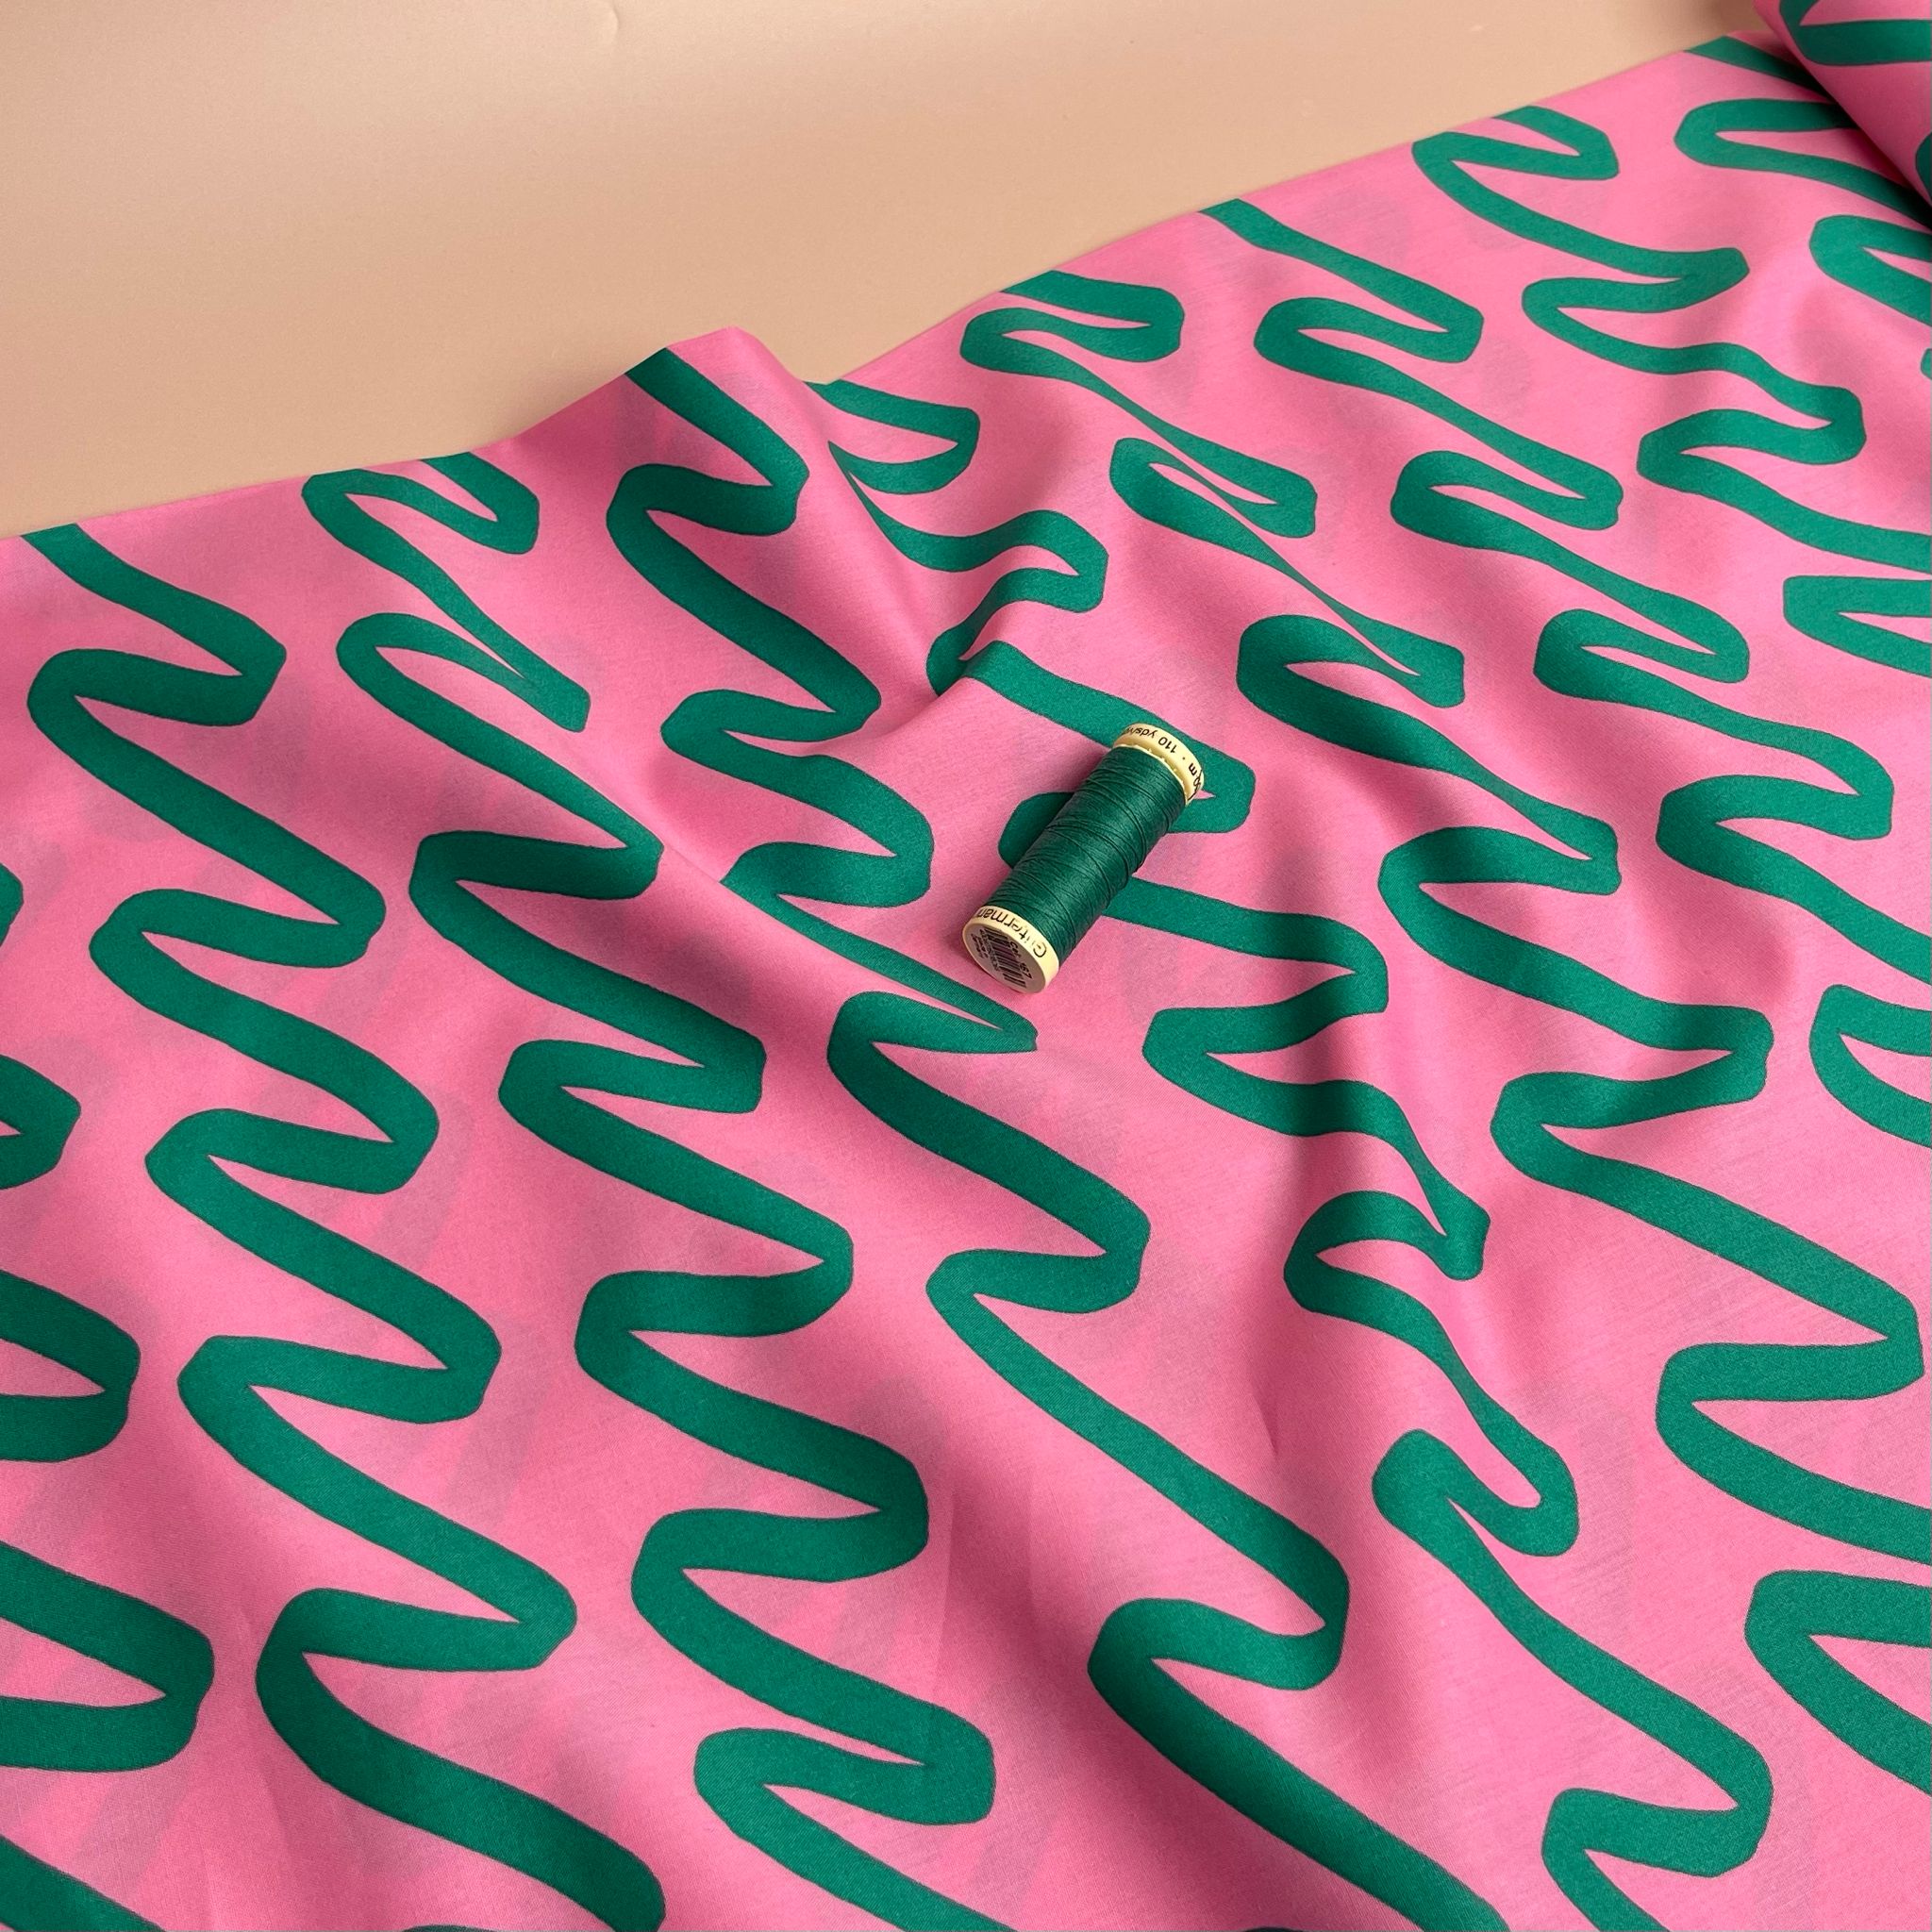 Nerida Hansen - Making Waves on Pink Cotton Poplin Fabric